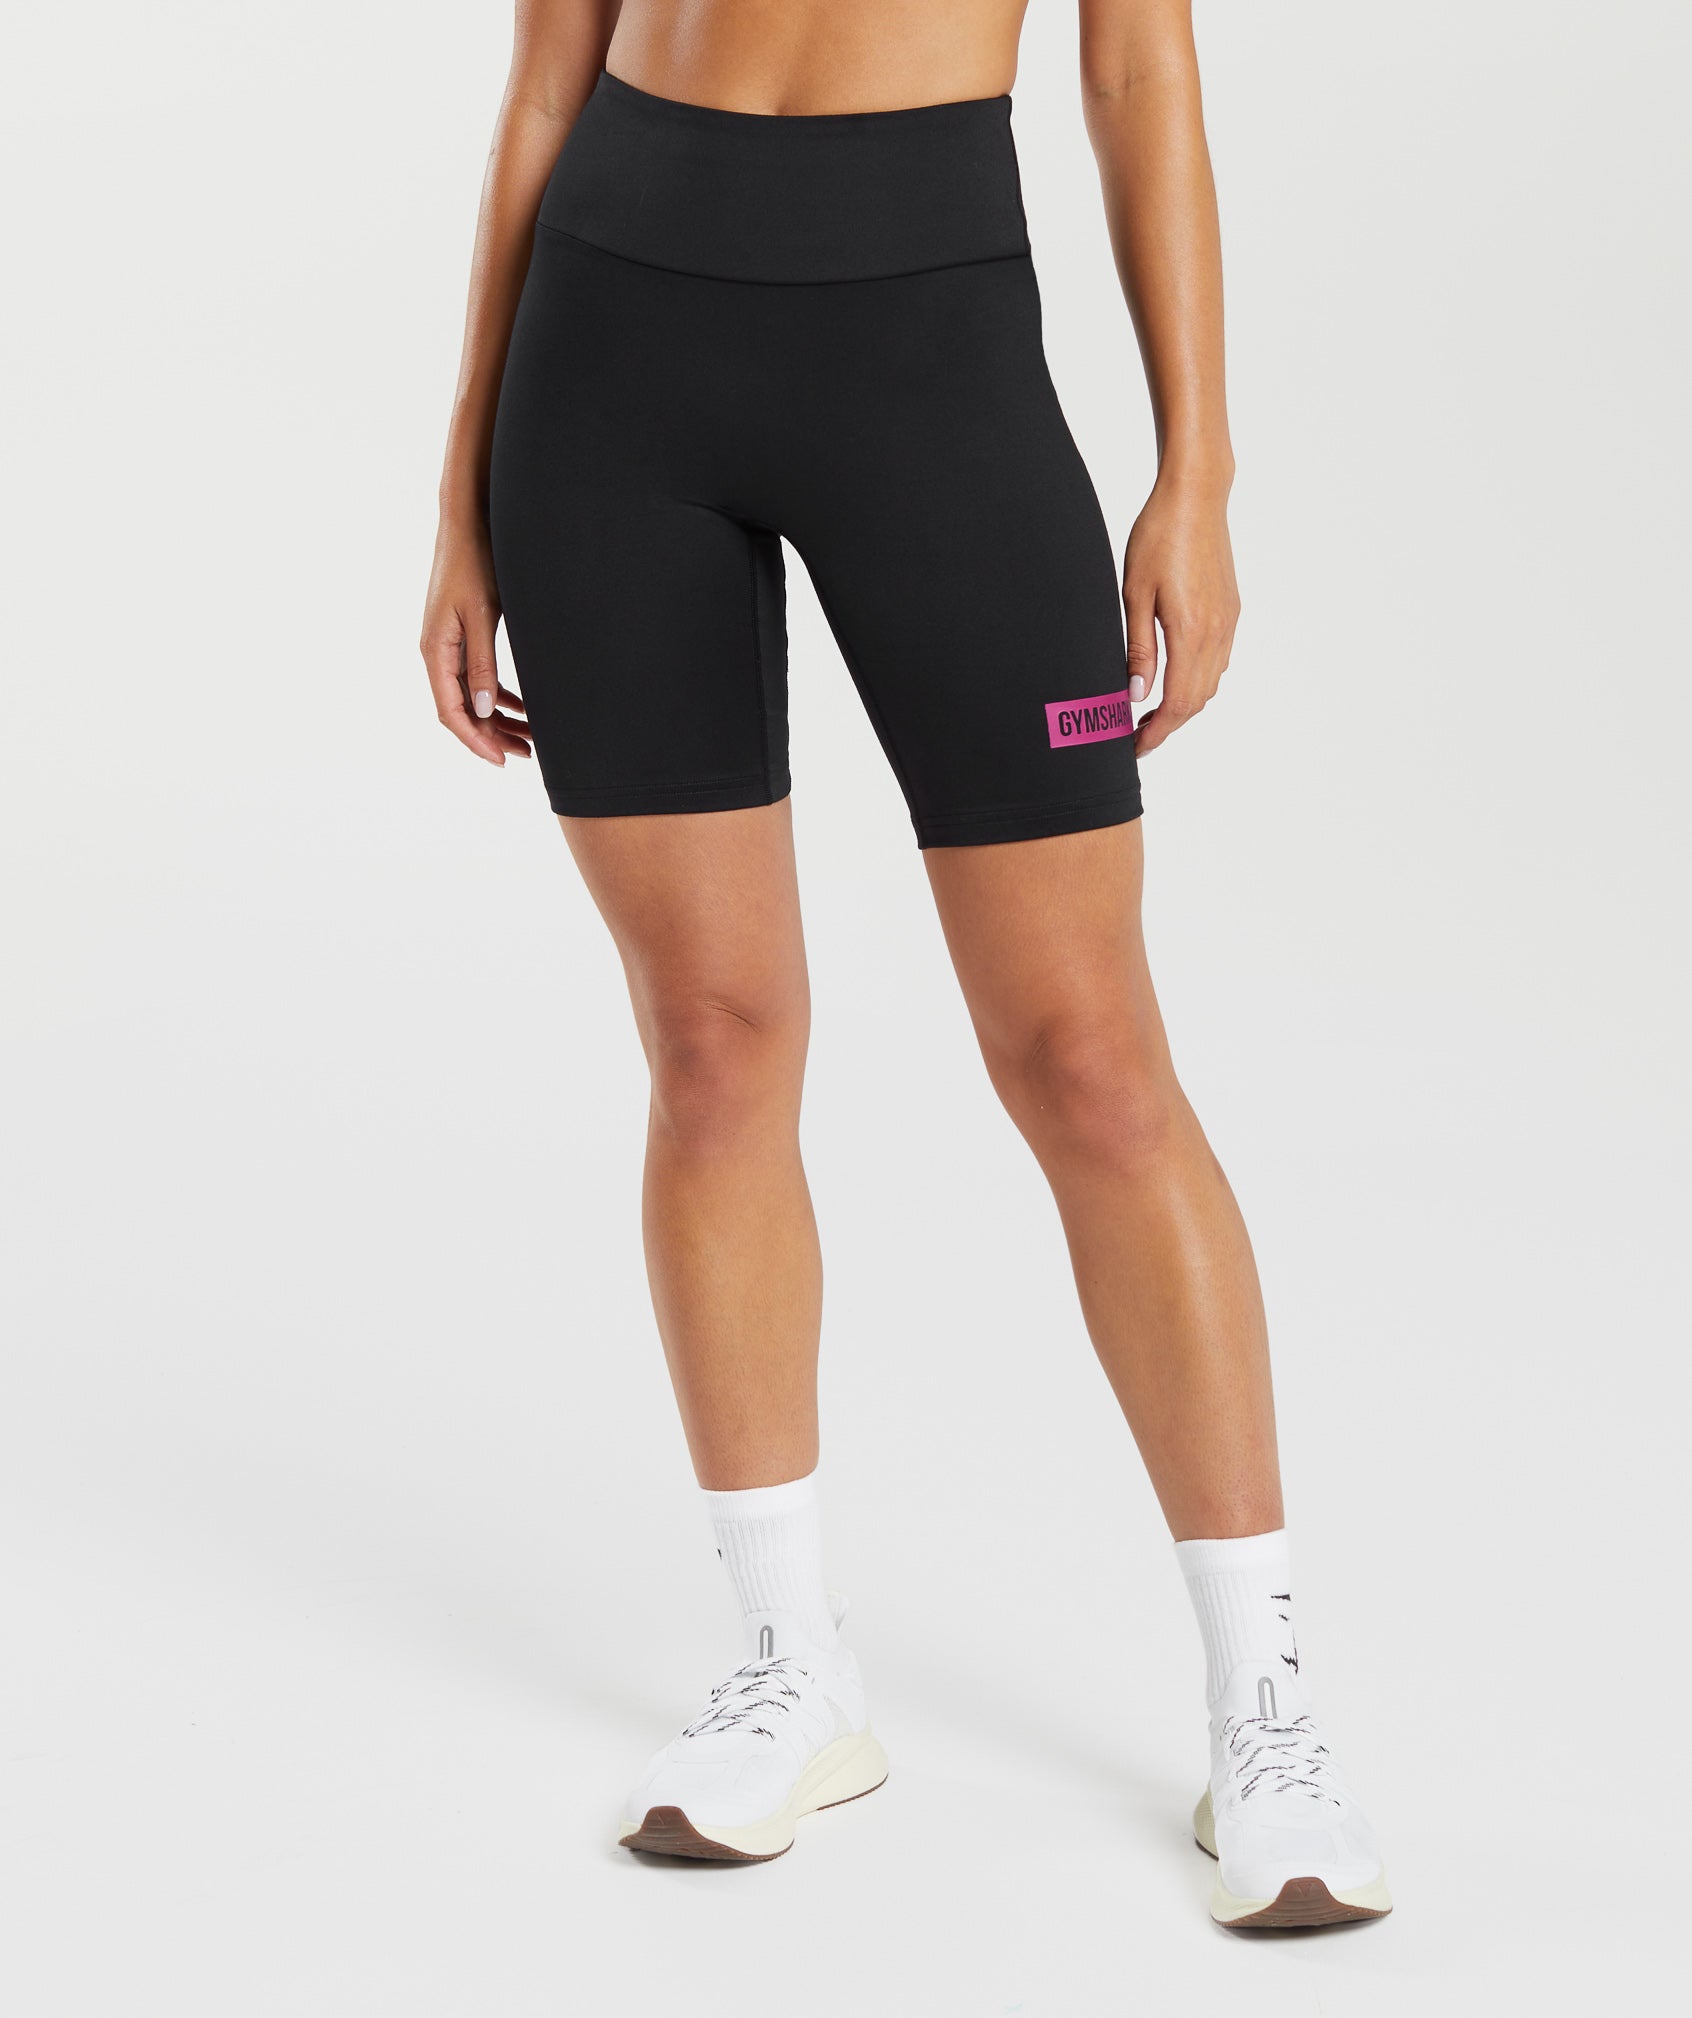 Biker Shorts for Women, Fitness Shorts, Gym Shorts, Elastic Short